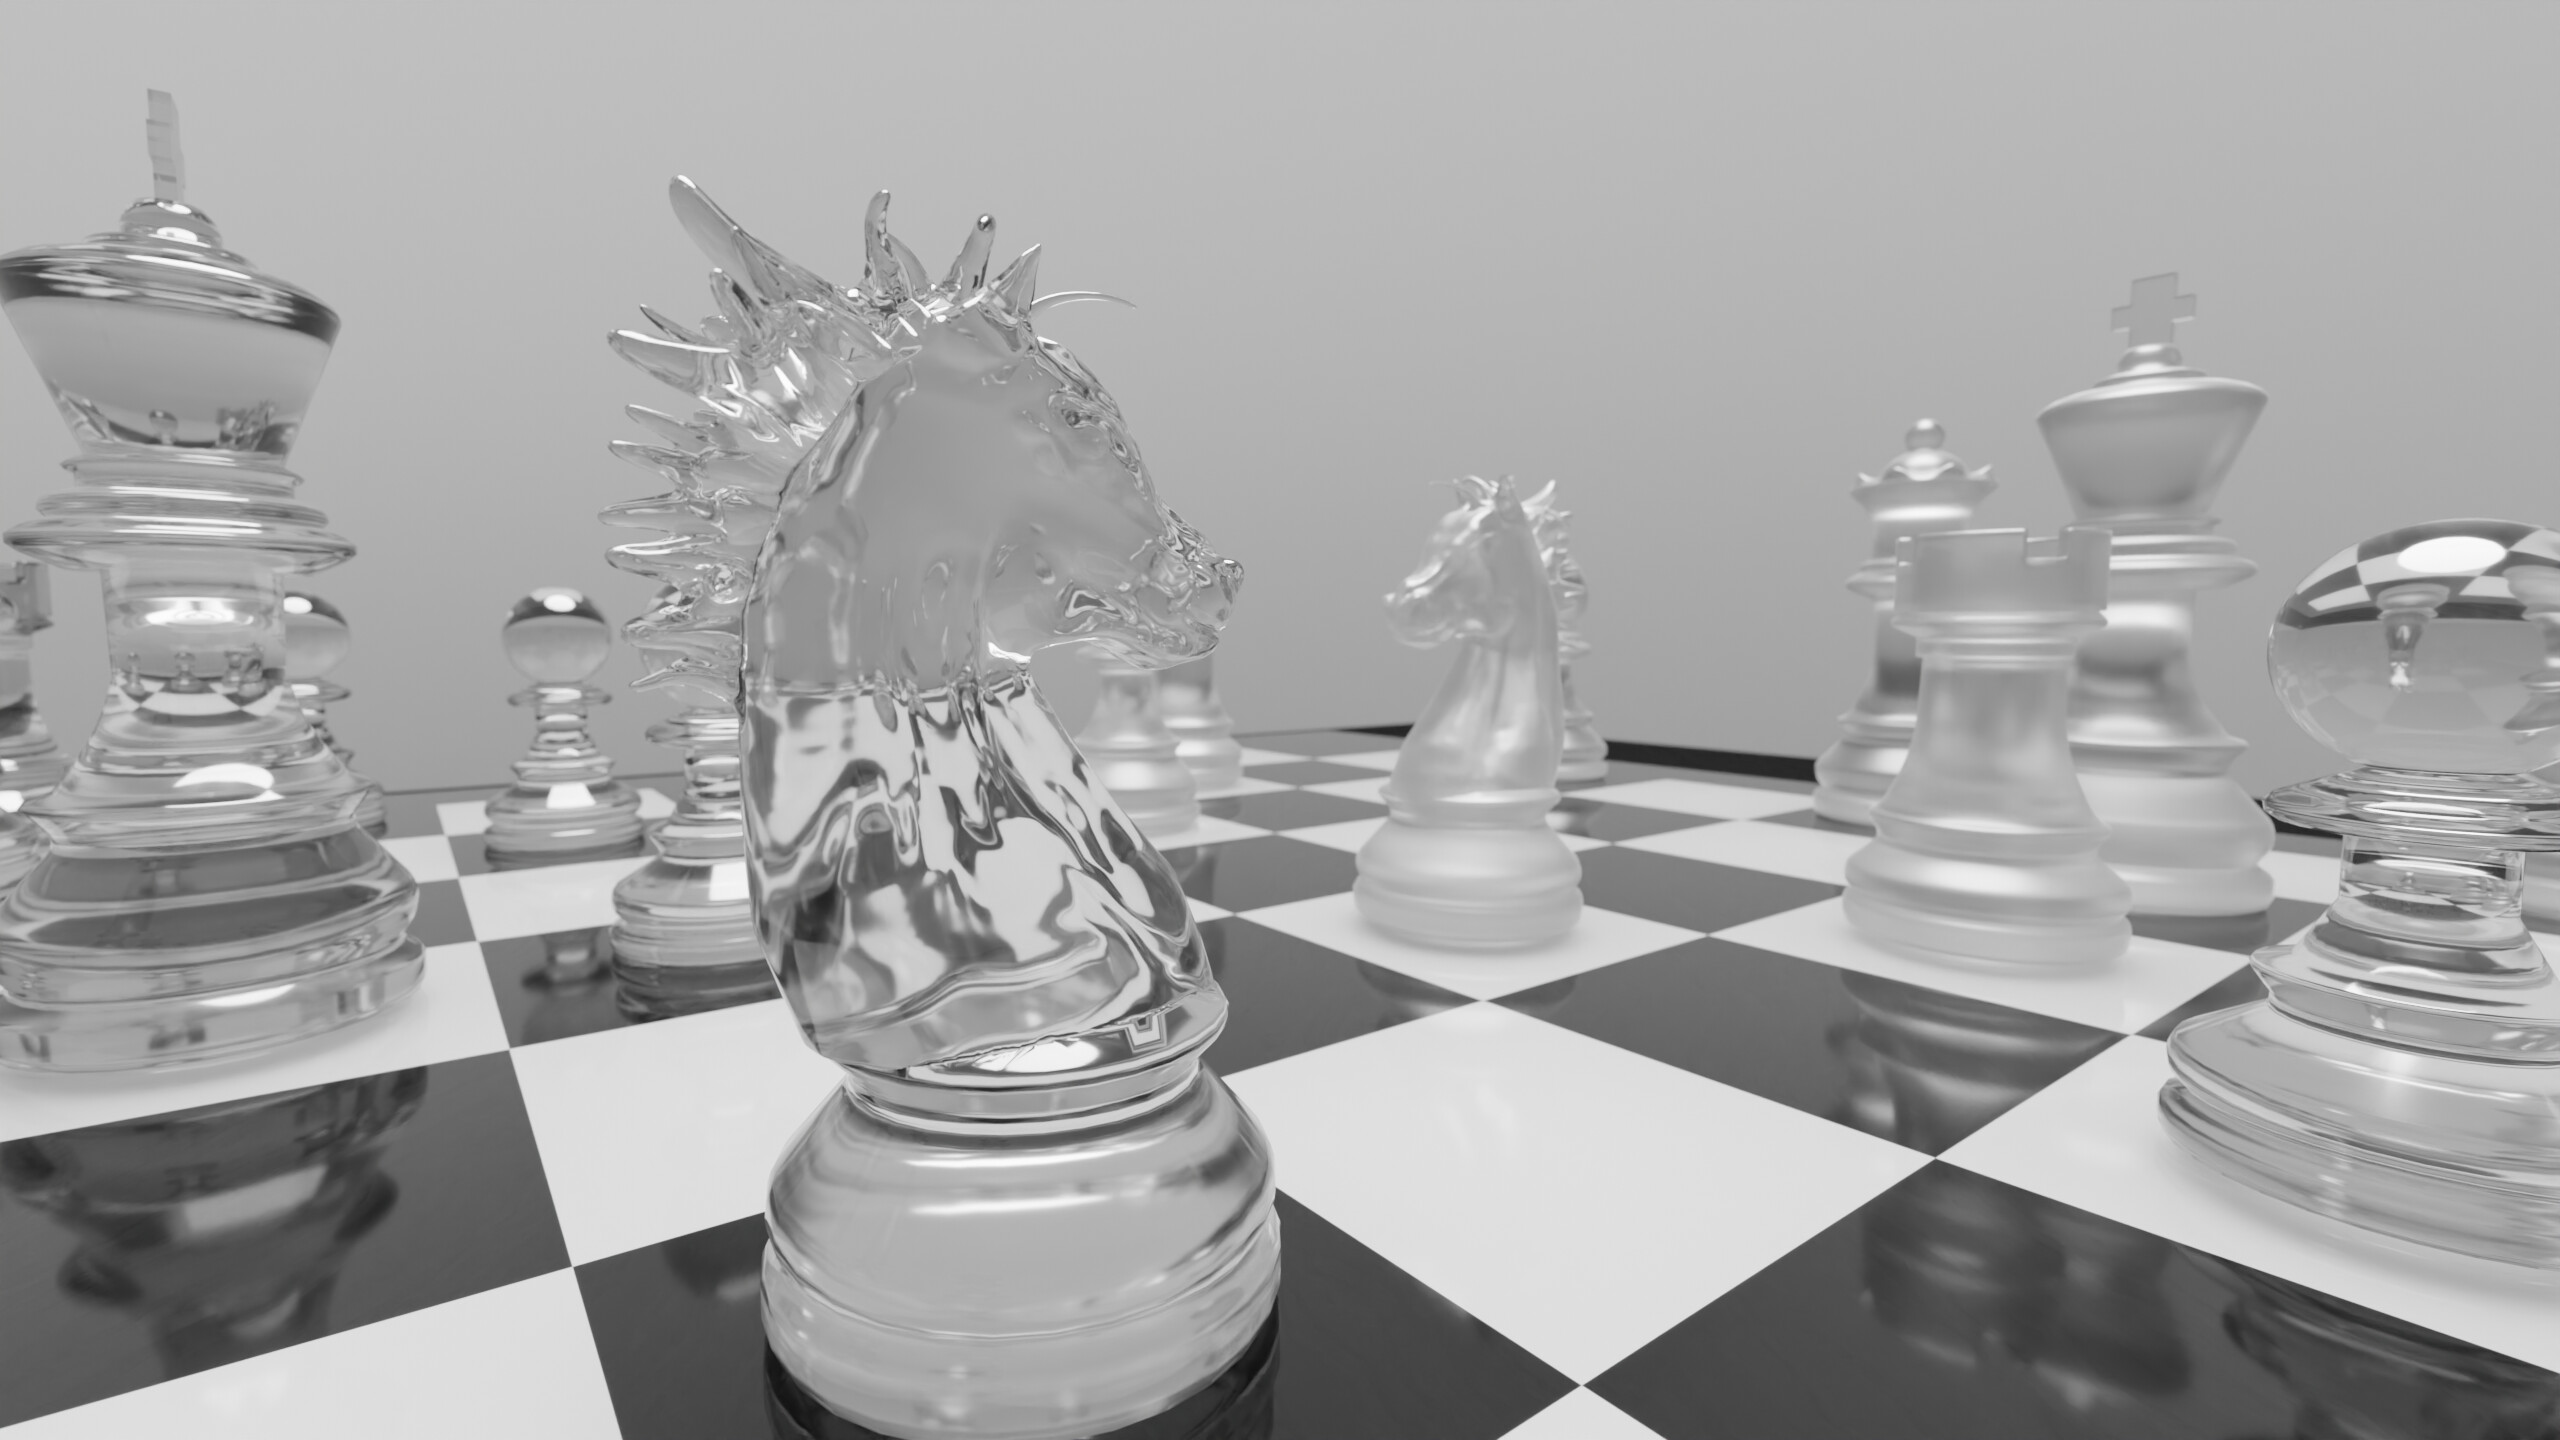 Finished Chess Scene - Talk - GameDev.tv